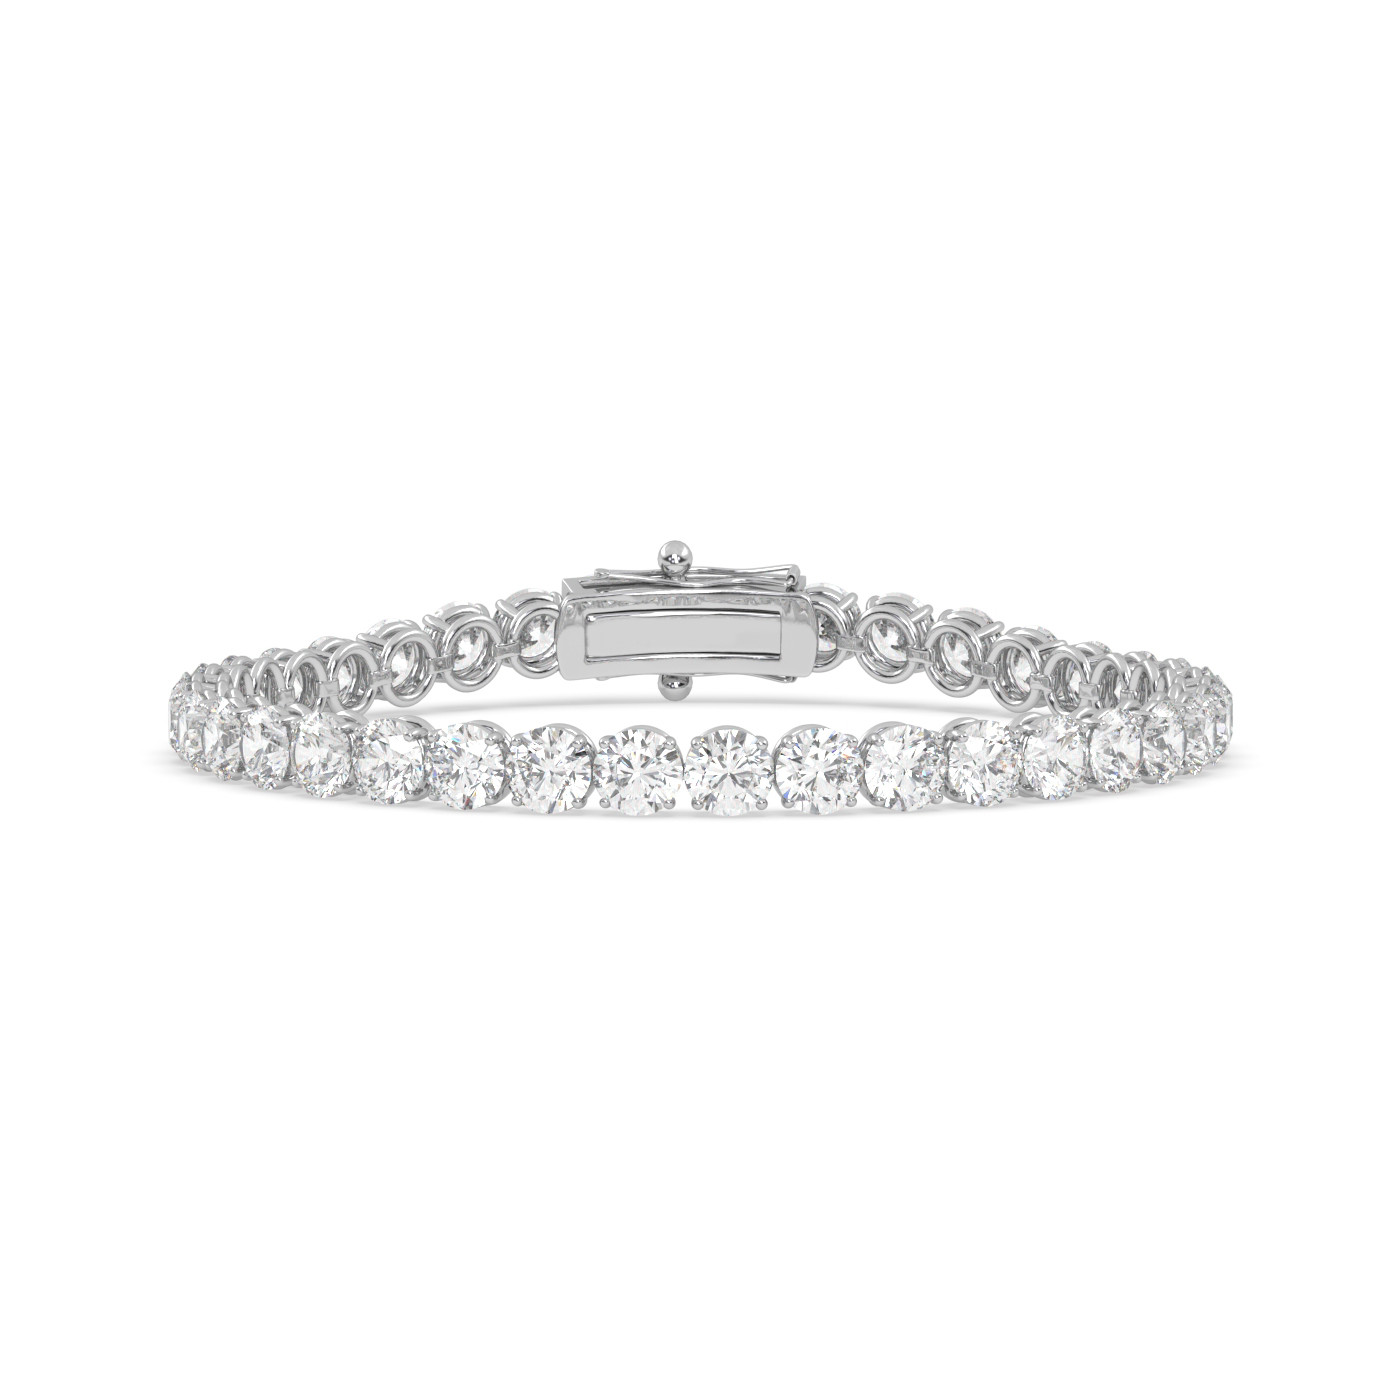 18k white gold 8.0 carat round diamond tennis bracelet with traditional lock sytem Photos & images